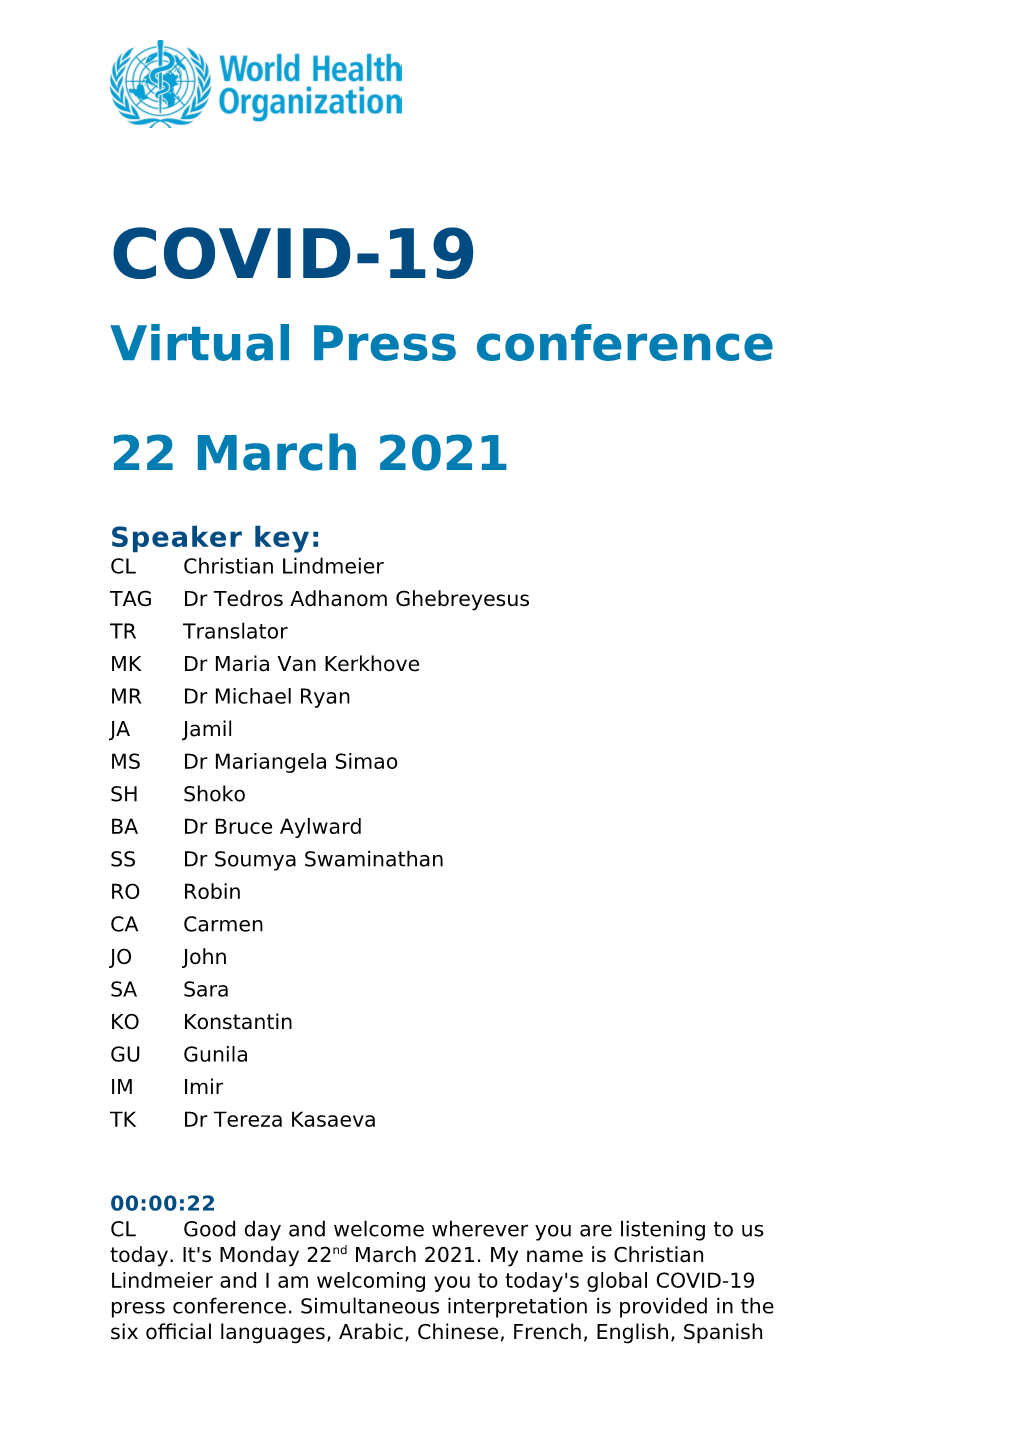 Virtual Press Conference 22 March 2021